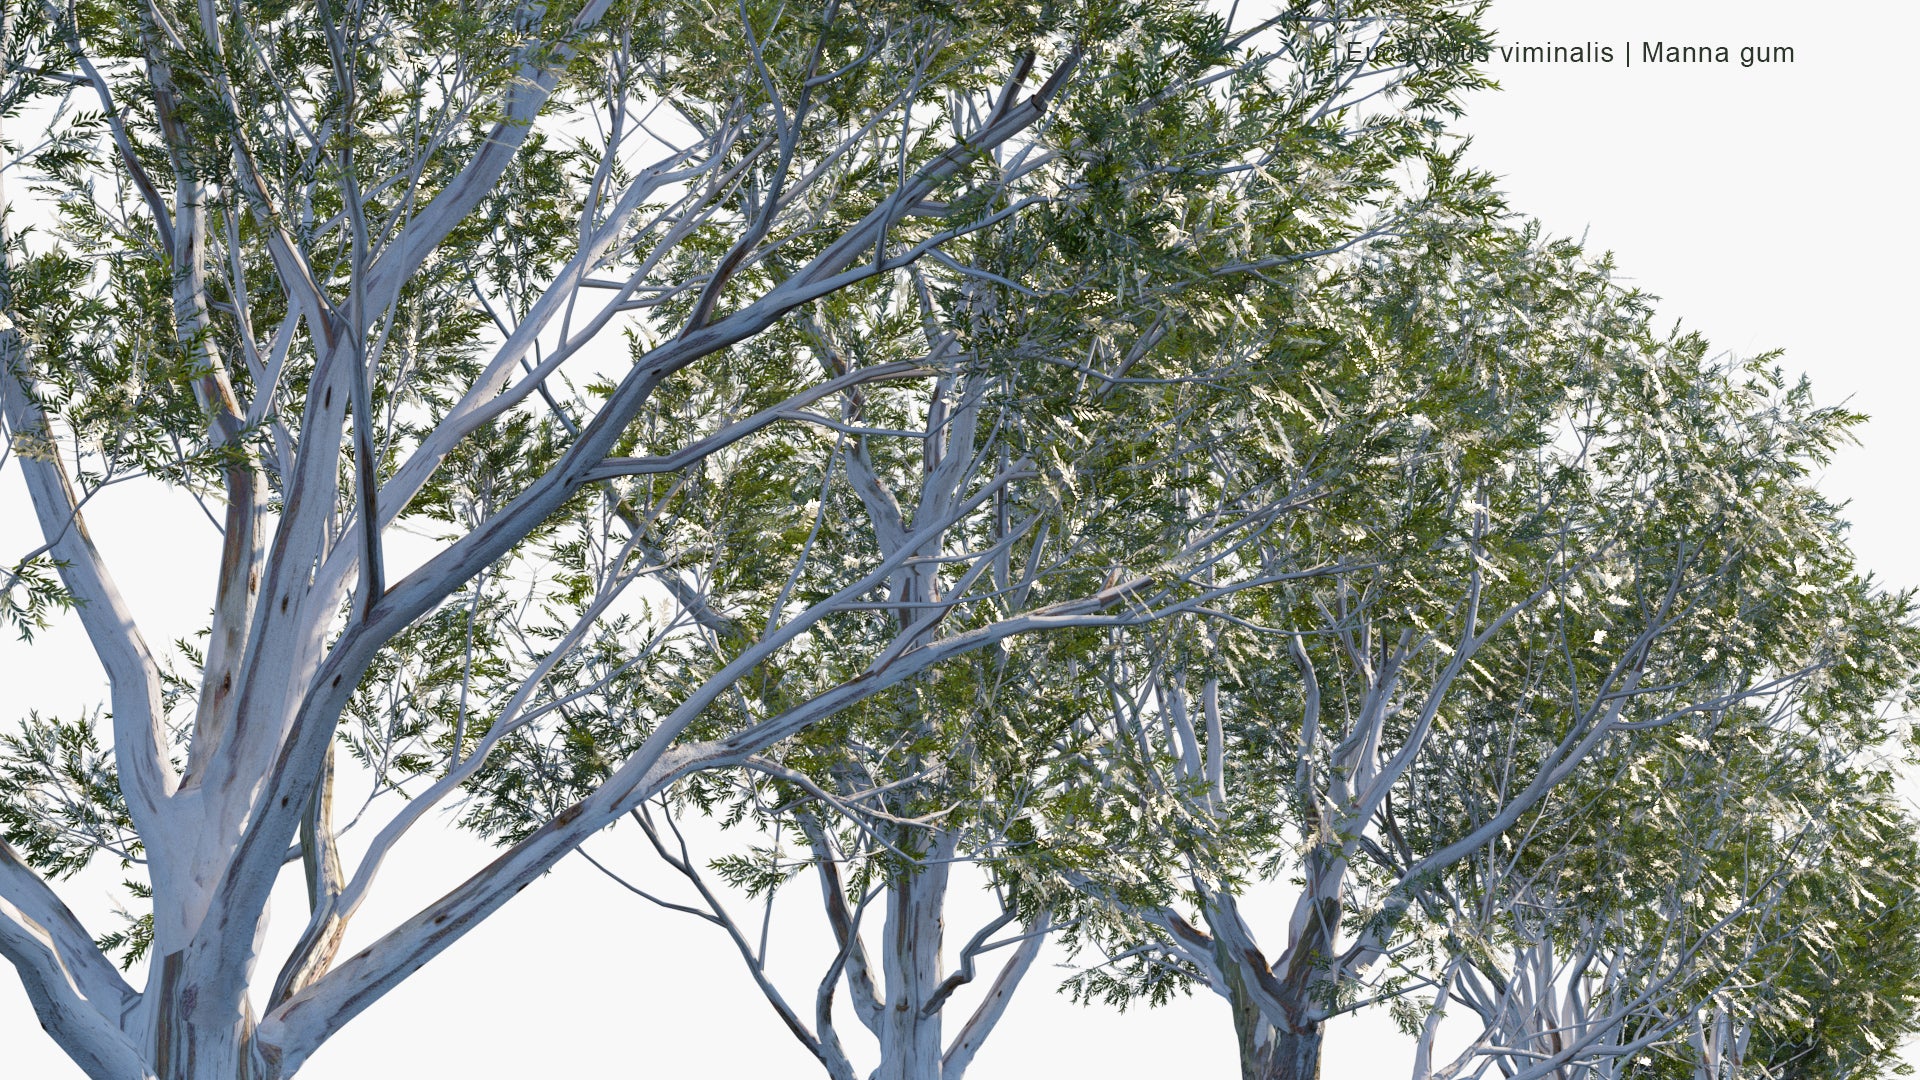 Low Poly Eucalyptus Viminalis - Manna Gum, White Gum, Ribbon Gum (3D Model)